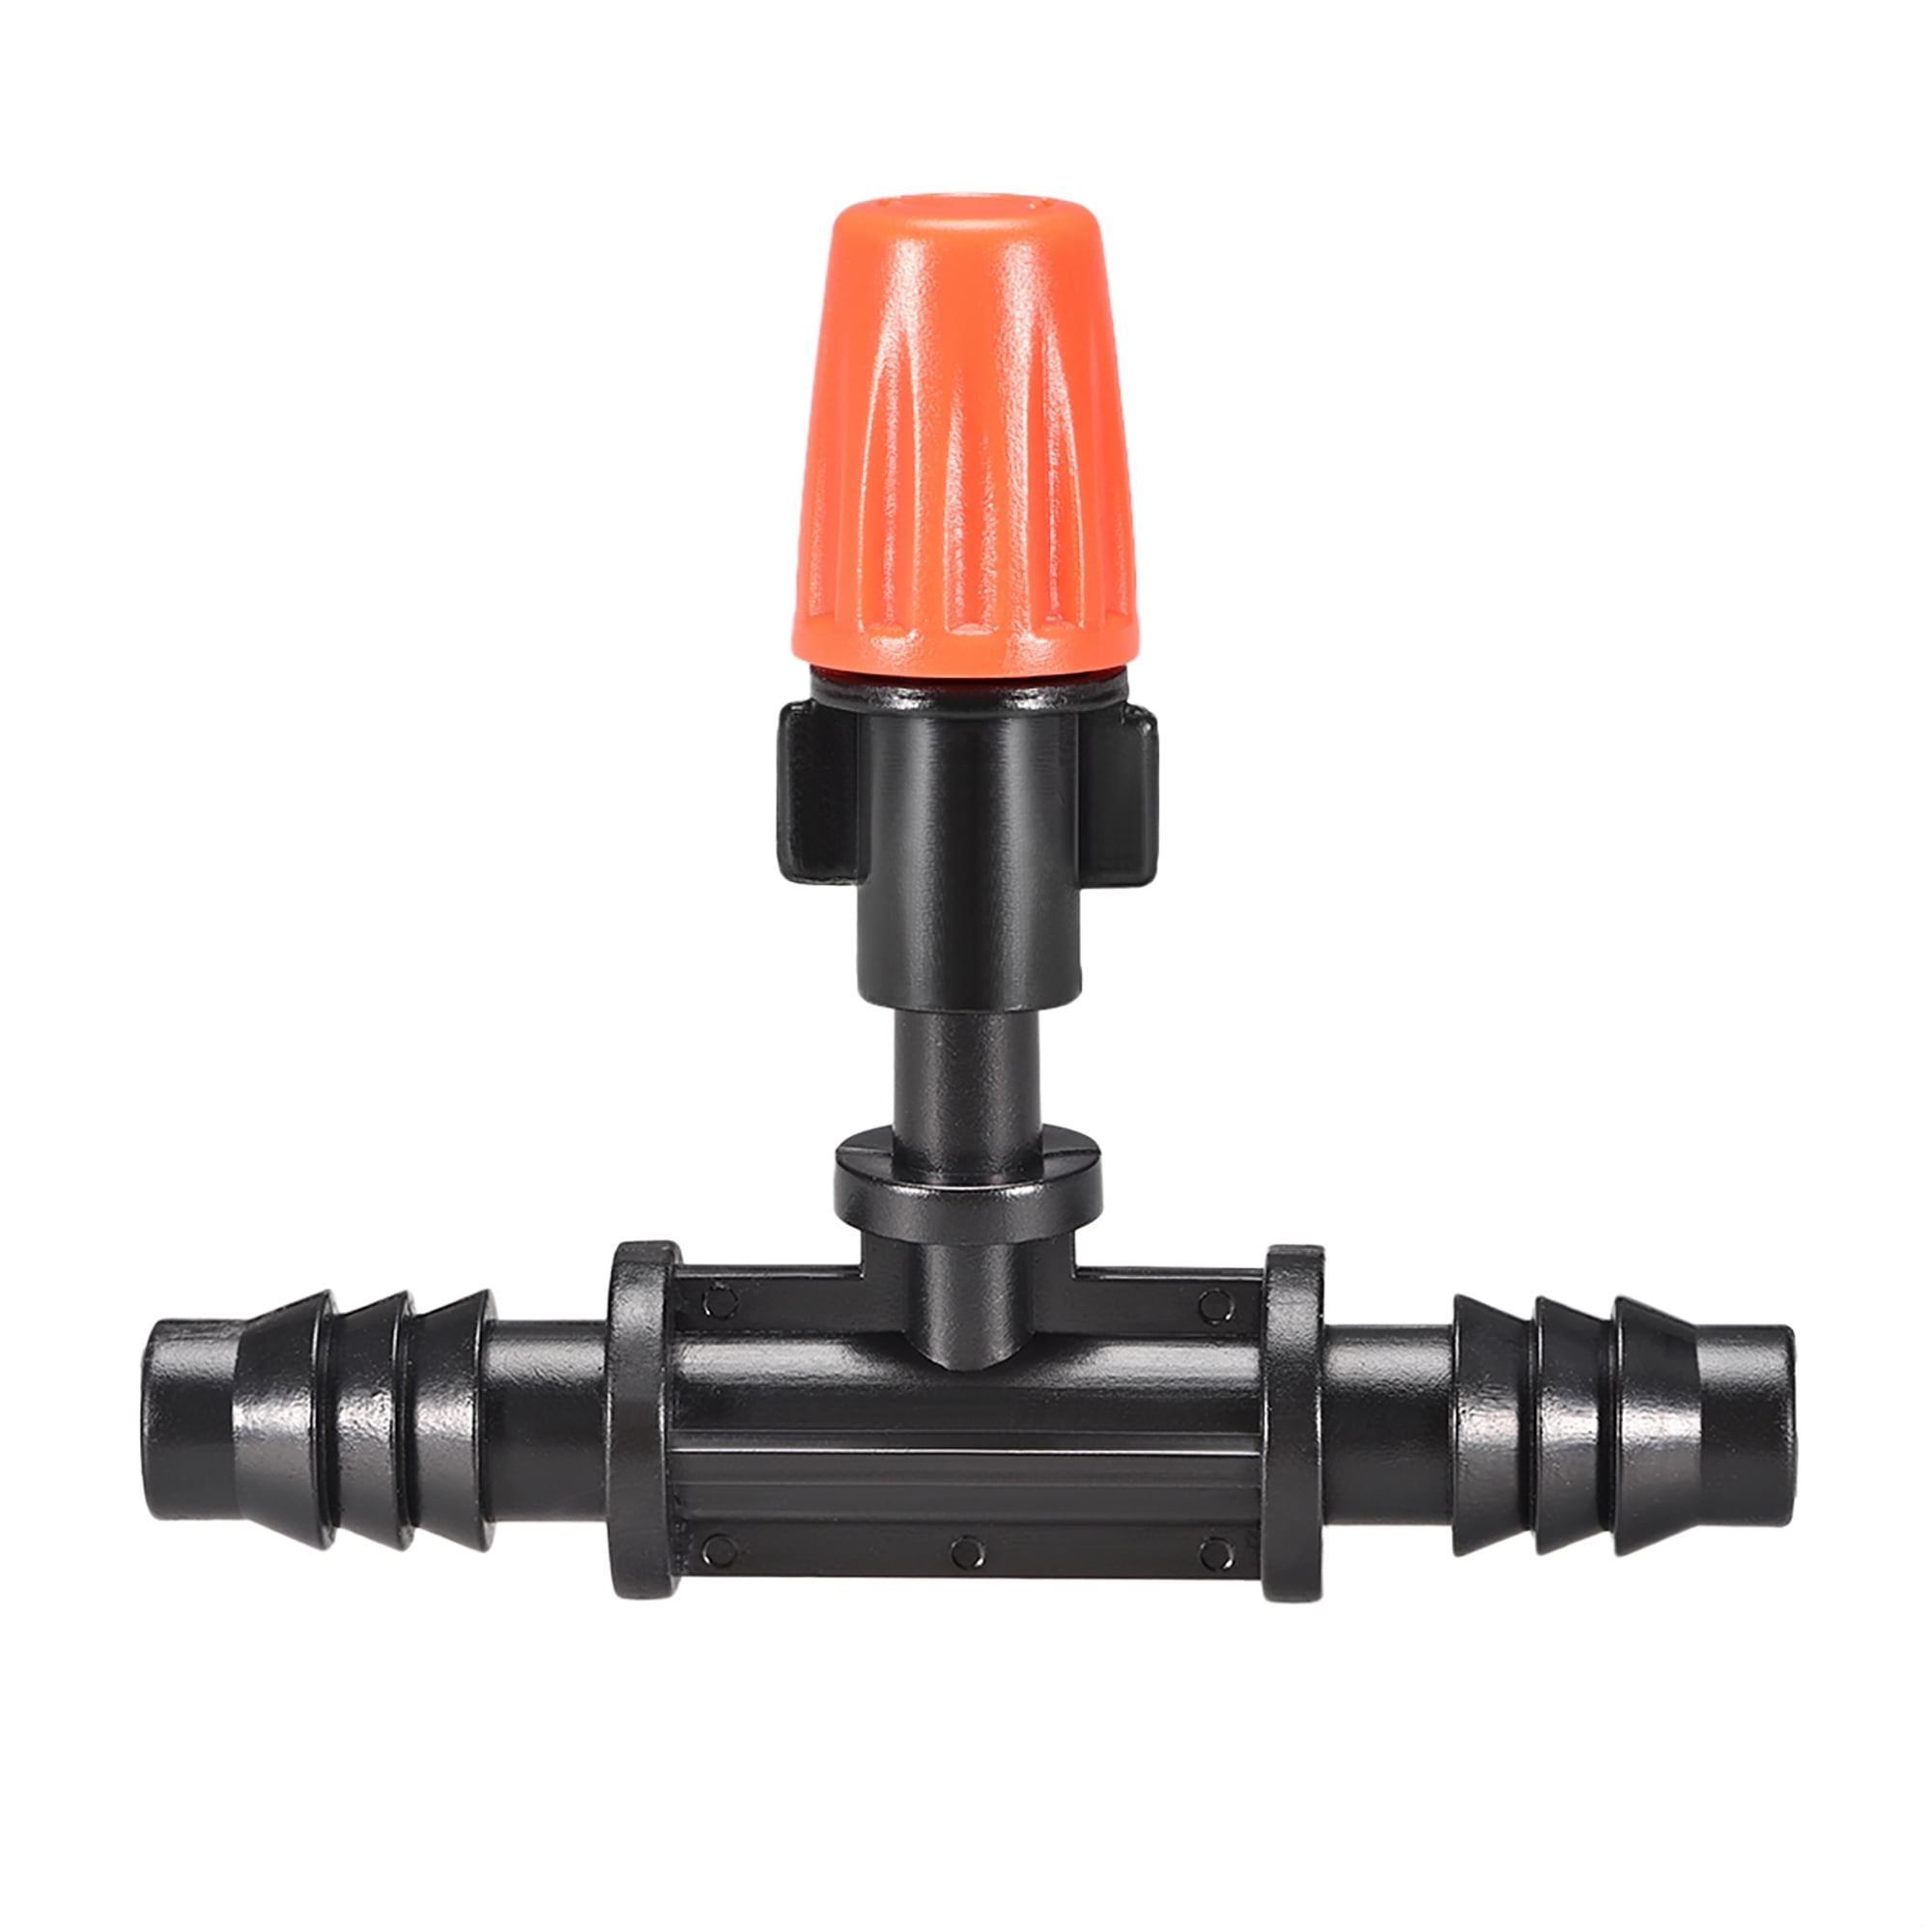 50pcs Yard Drip System Irrigation Drippers Nozzle Barb Connector Kits Tools Set 